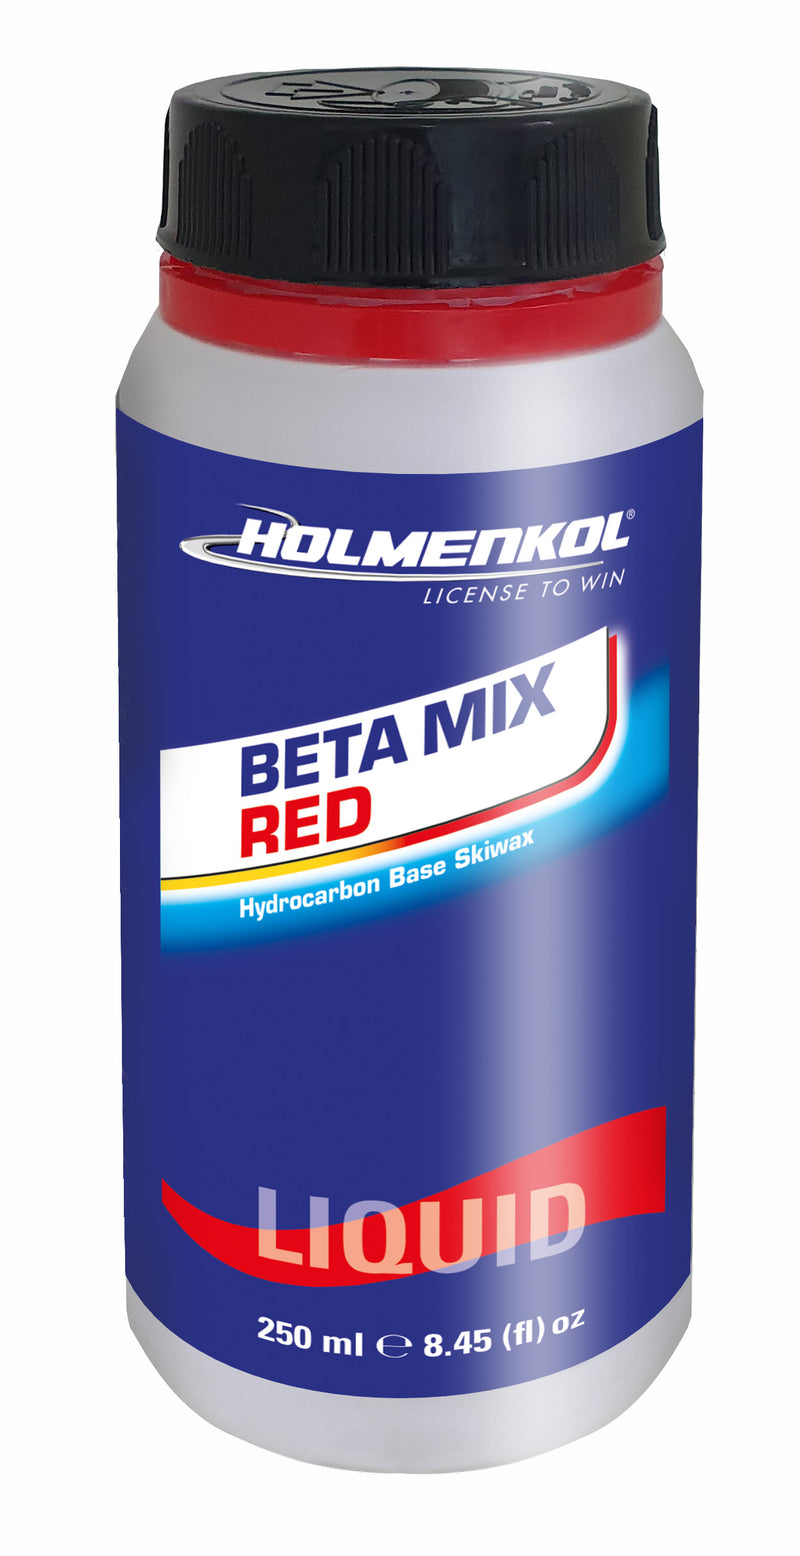 Holmenkol BetaMix Liquid Red 250ml Base Wax Flüssigwachs